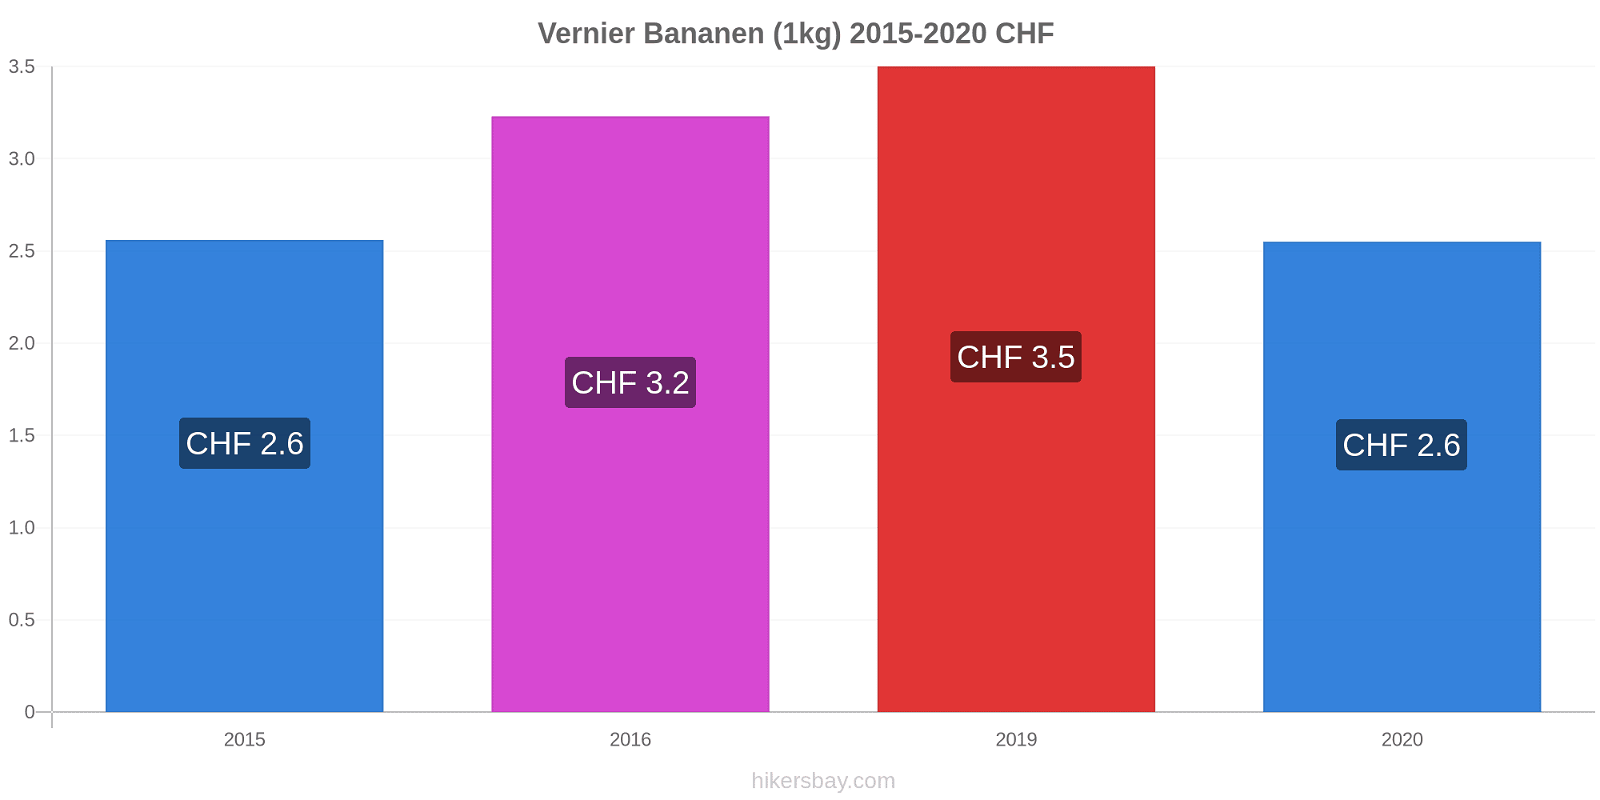 Vernier Preisänderungen Banane (1kg) hikersbay.com